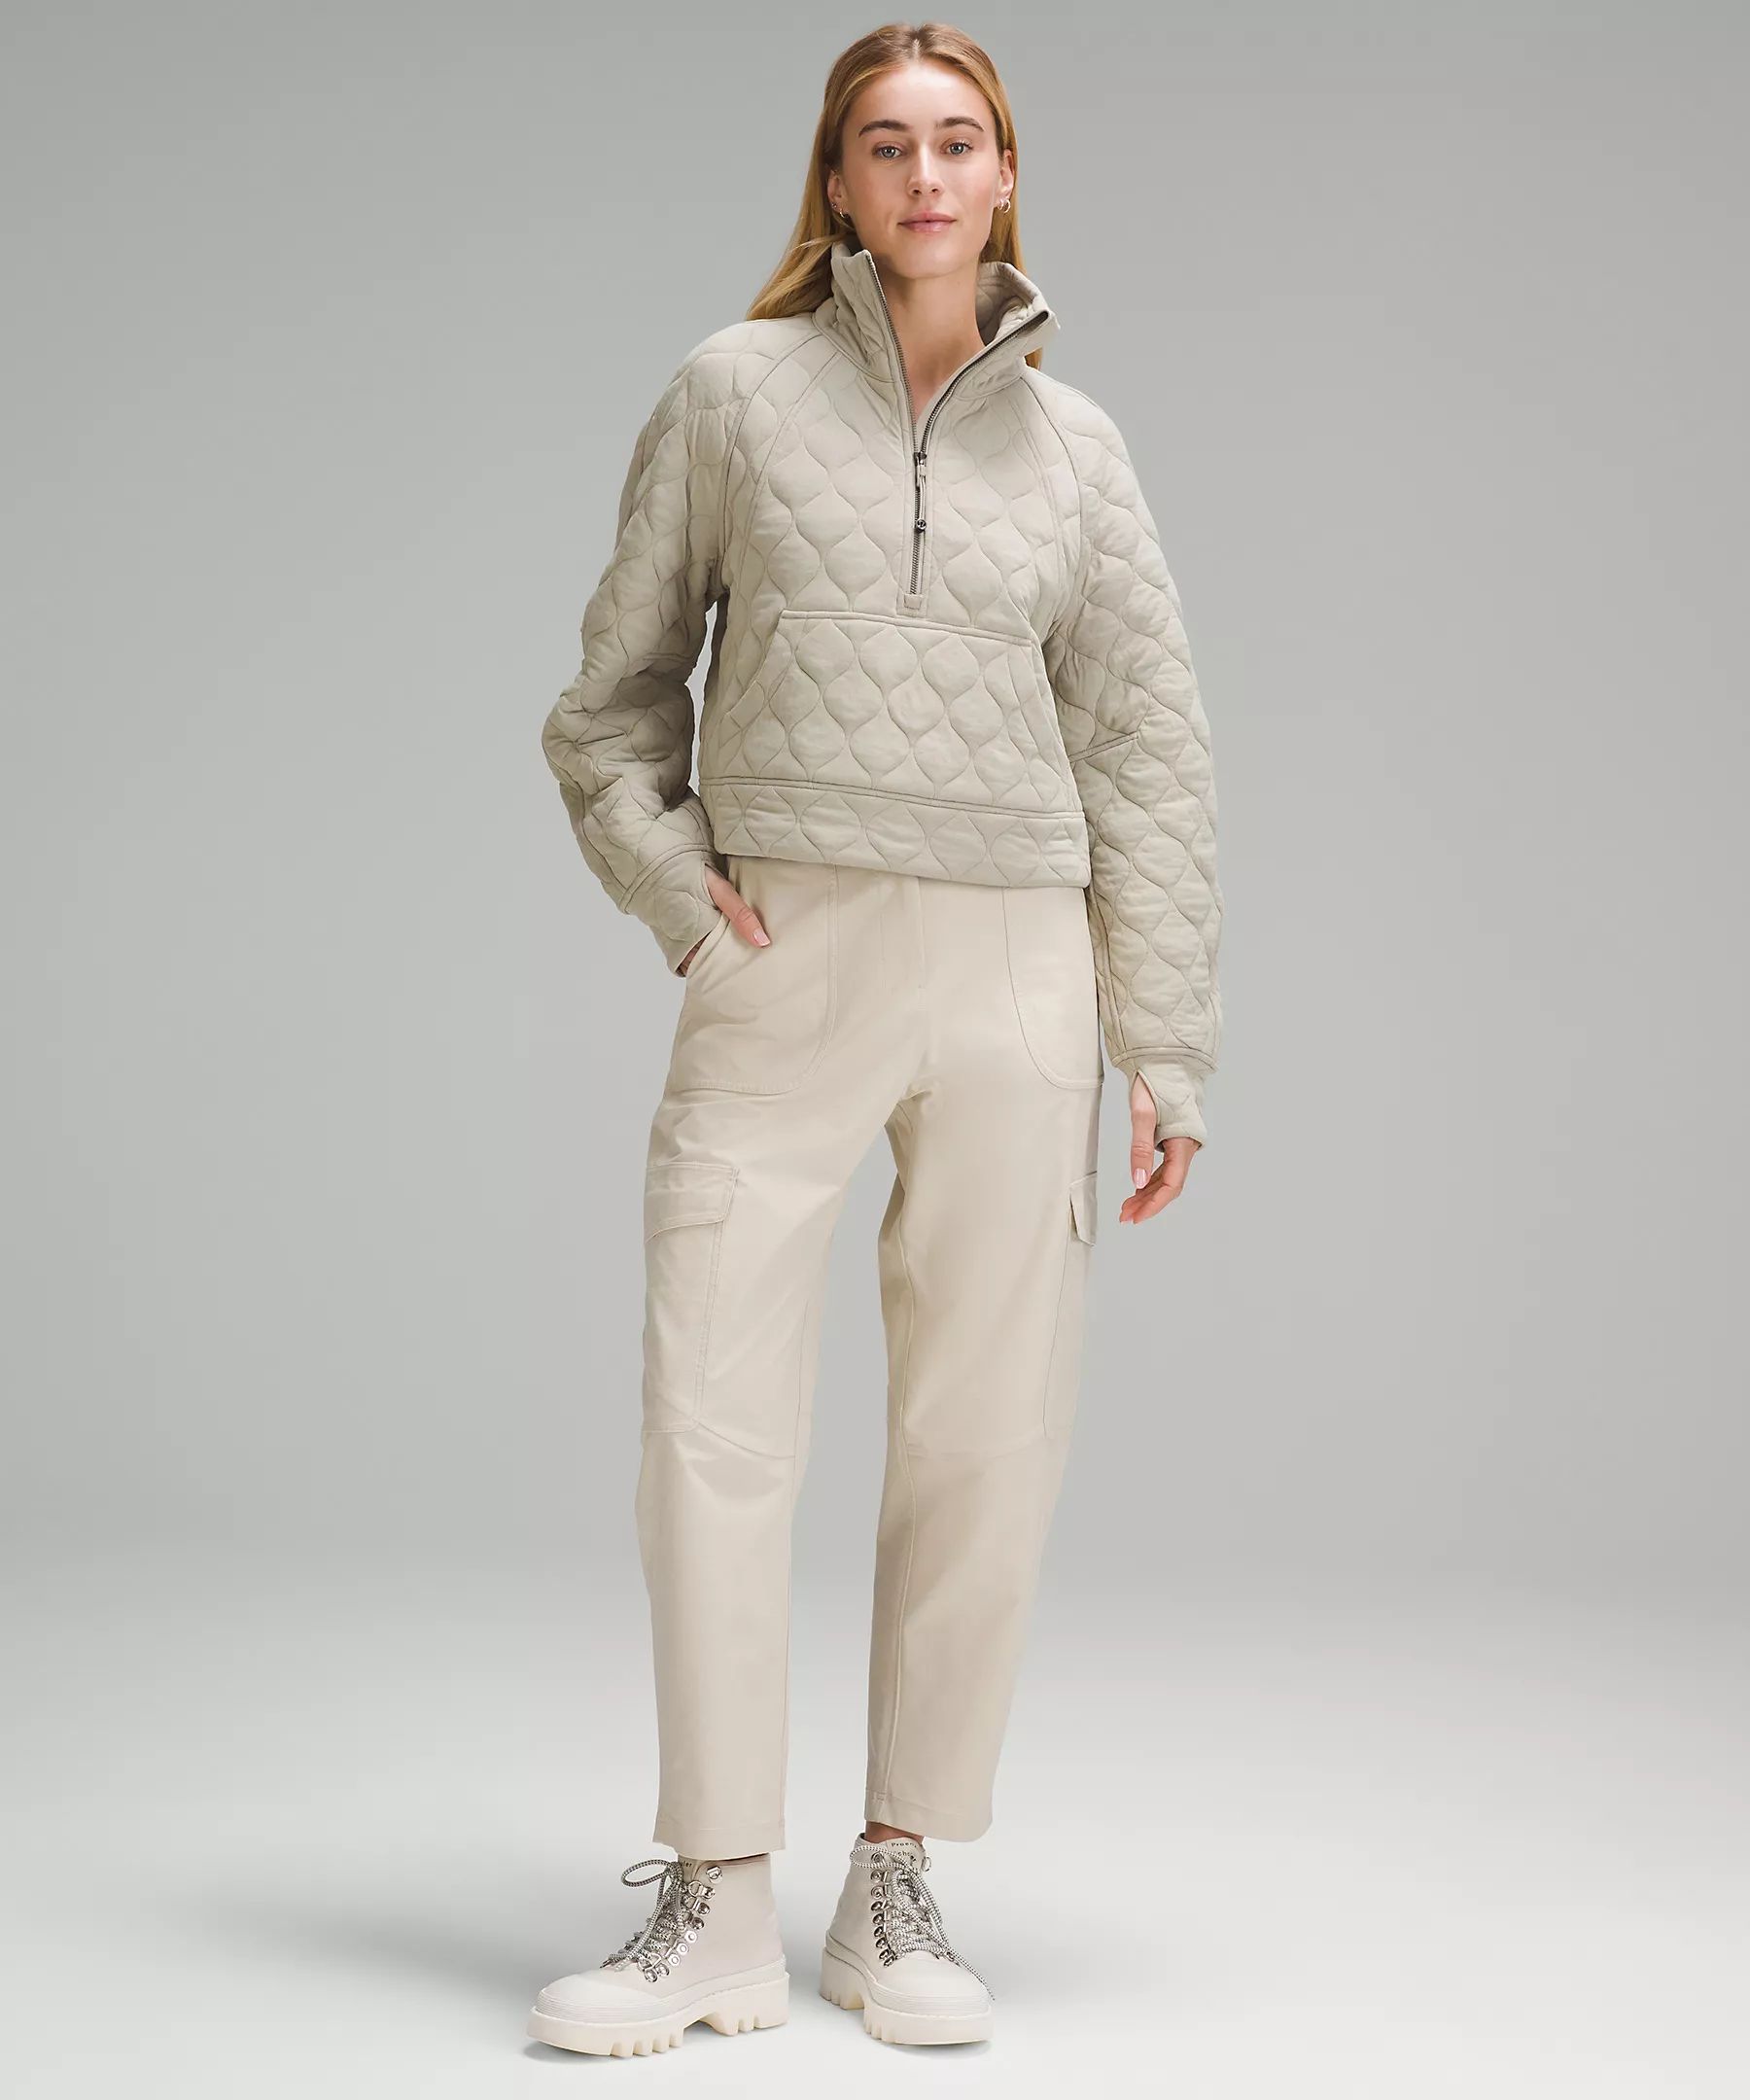 Scuba Oversized Quilted Half Zip | Women's Hoodies & Sweatshirts | lululemon | Lululemon (US)